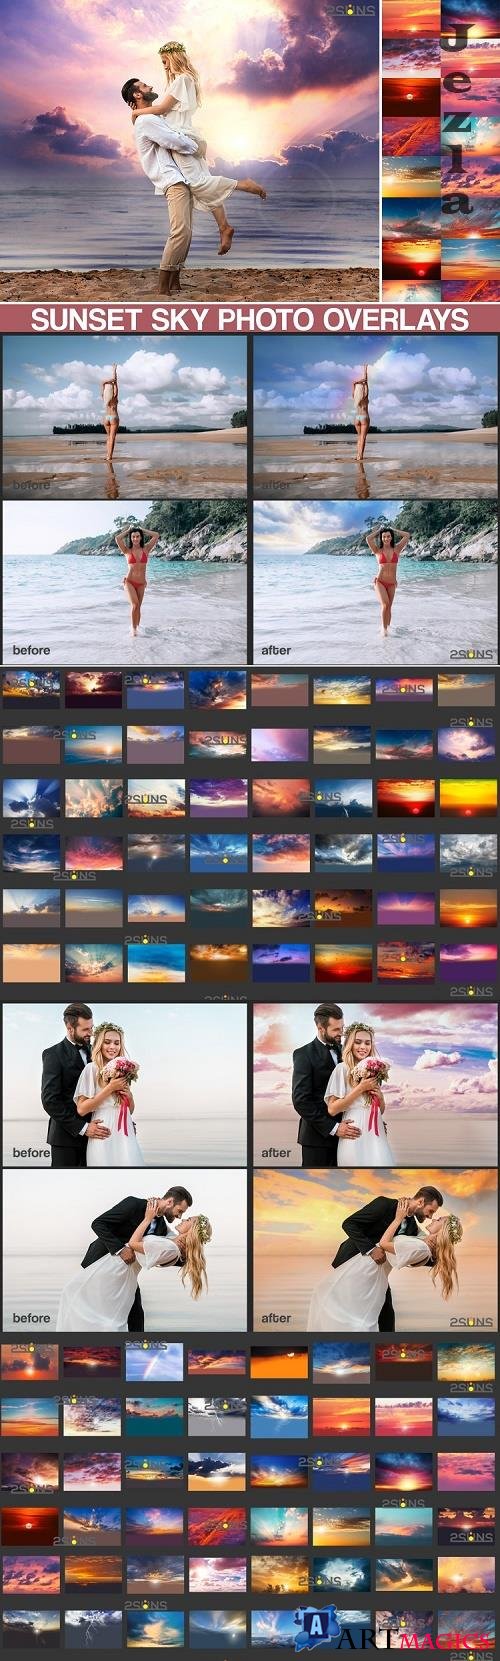 100 Sunset Sky Photo Overlays, photoshop - 551919